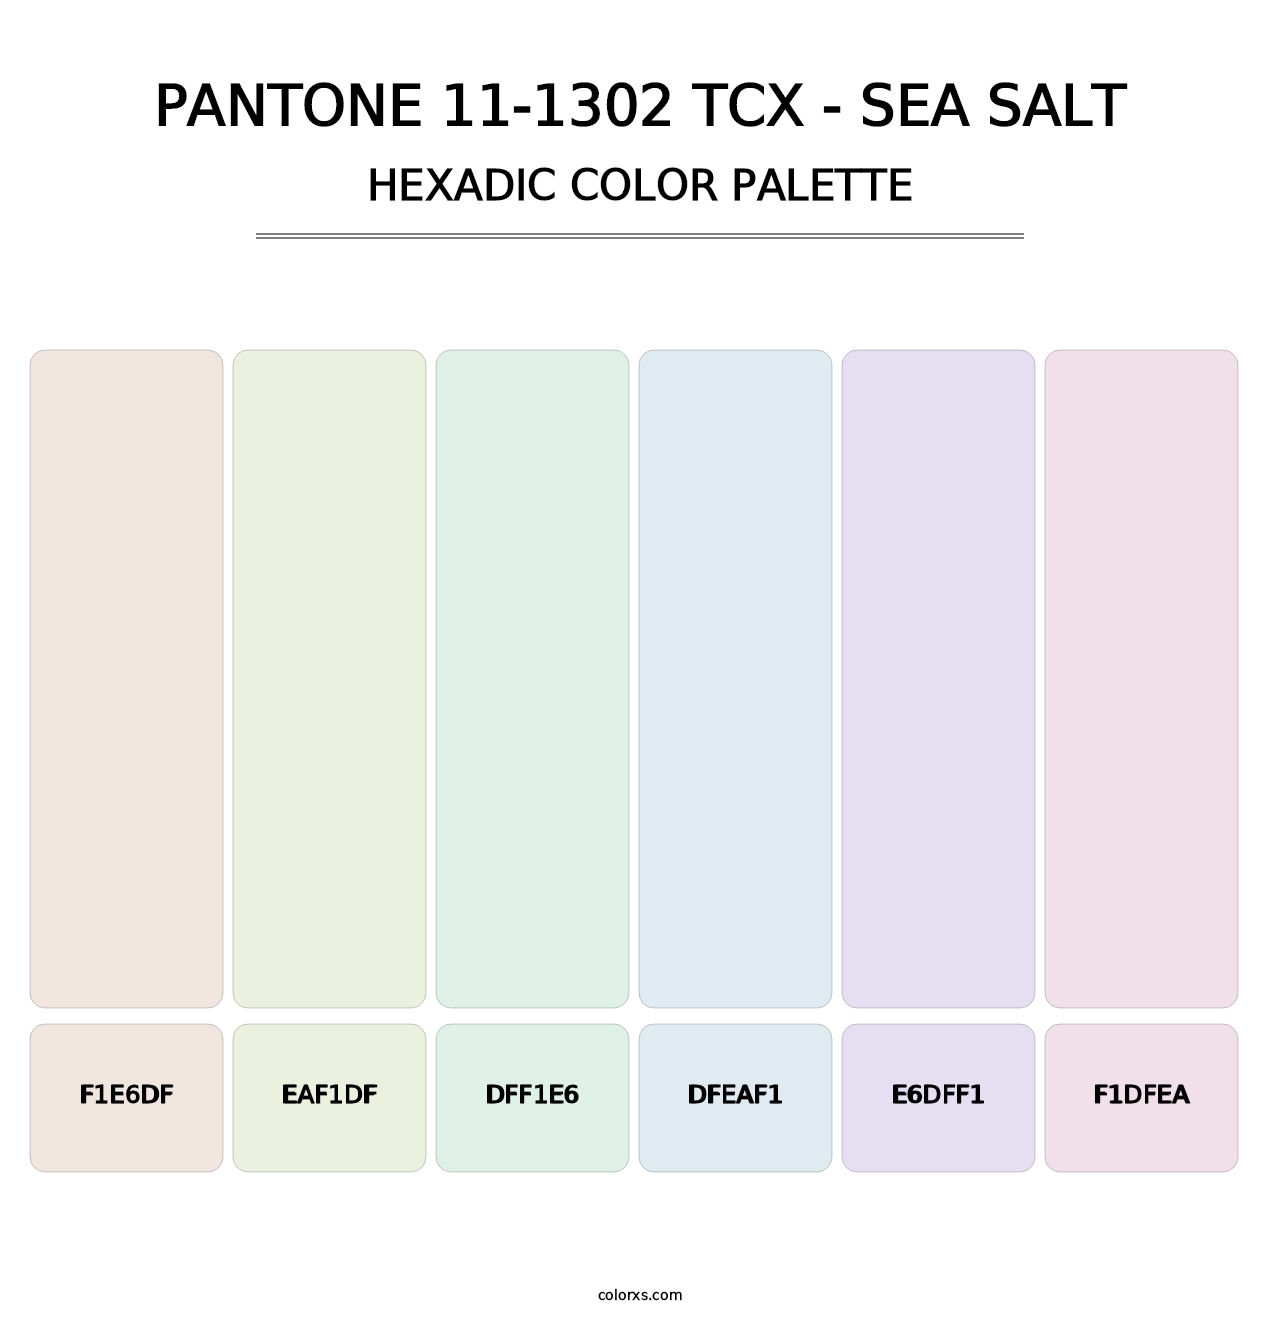 PANTONE 11-1302 TCX - Sea Salt - Hexadic Color Palette